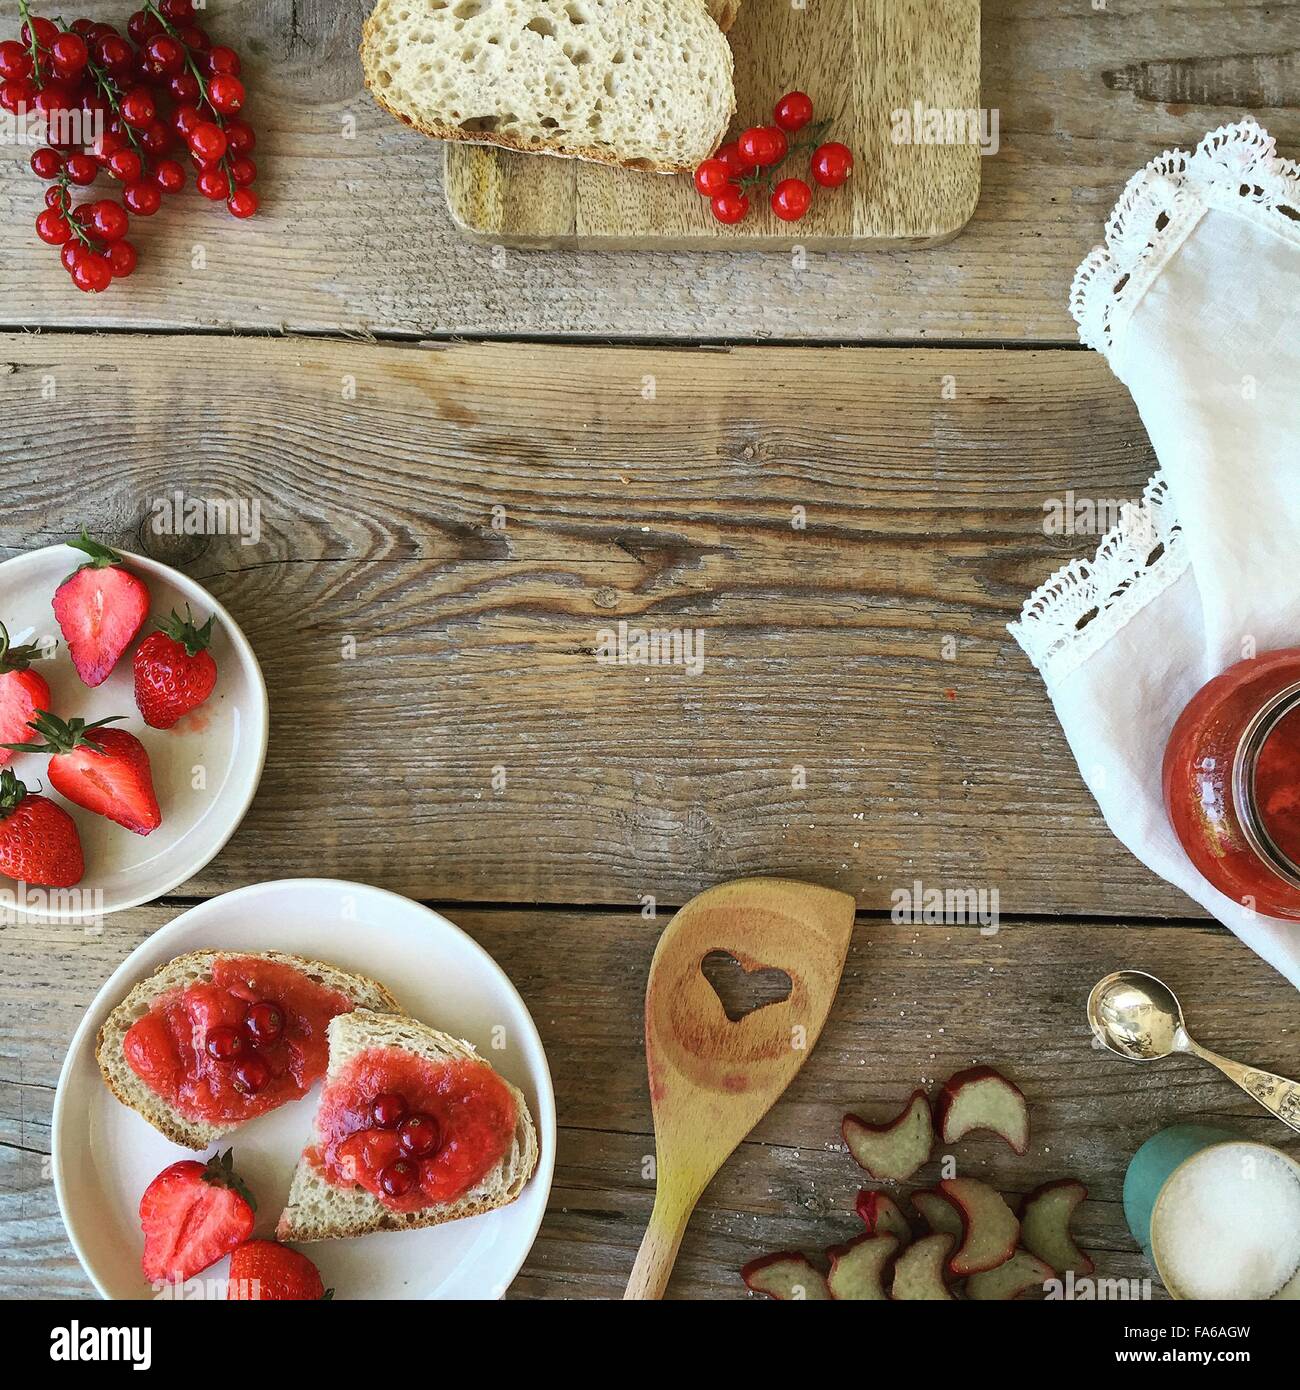 Strawberries, redcurrants, bread and jam Stock Photo